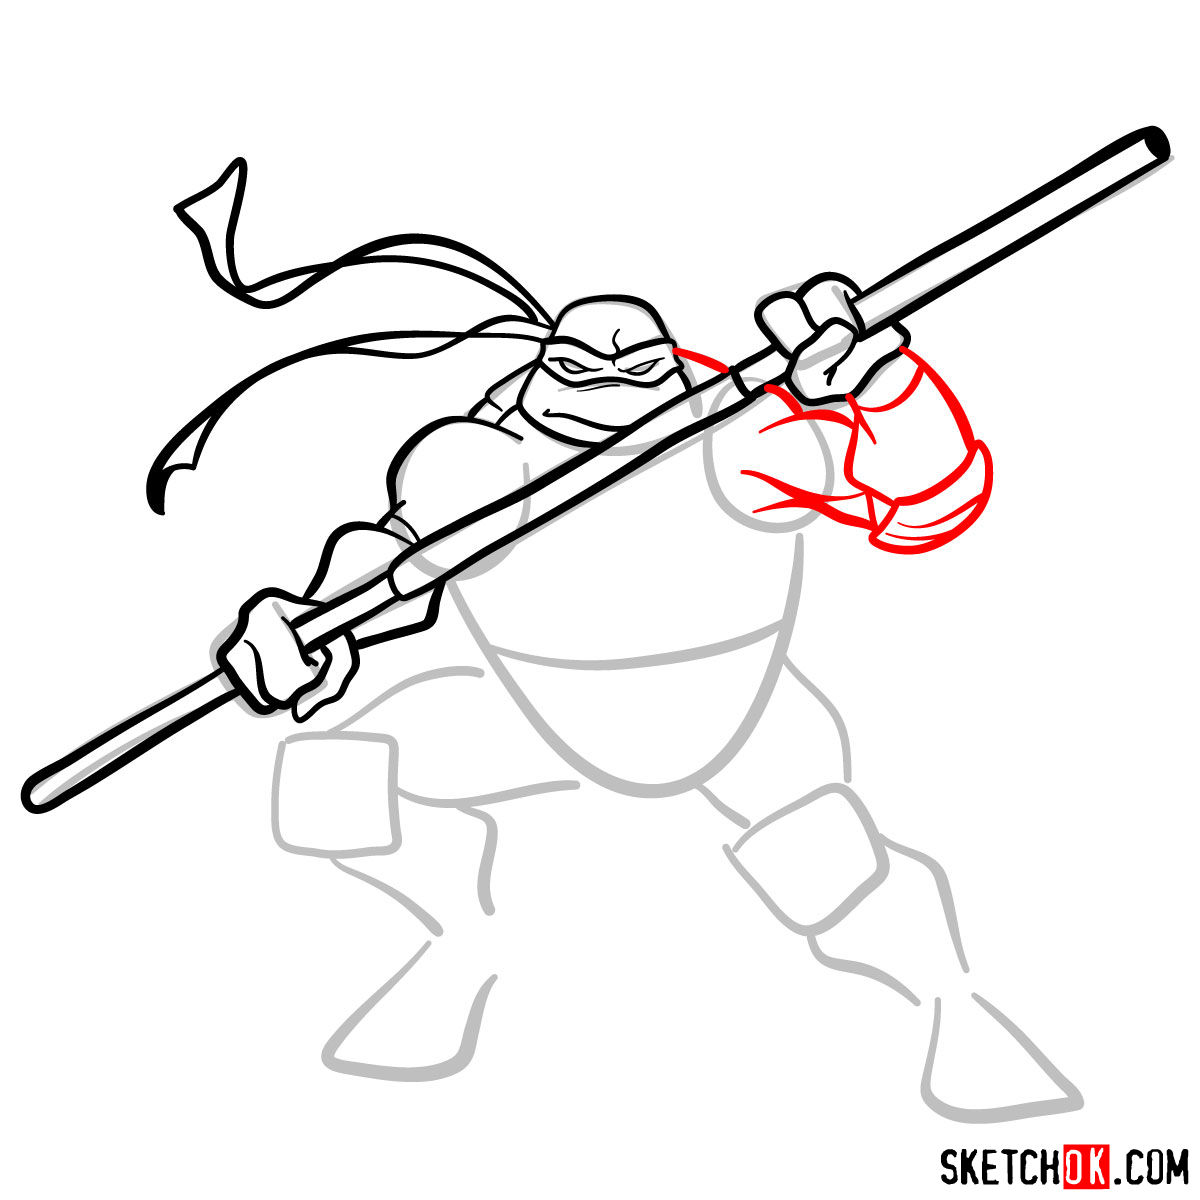 How to draw Donatello ninja turtle - step 08